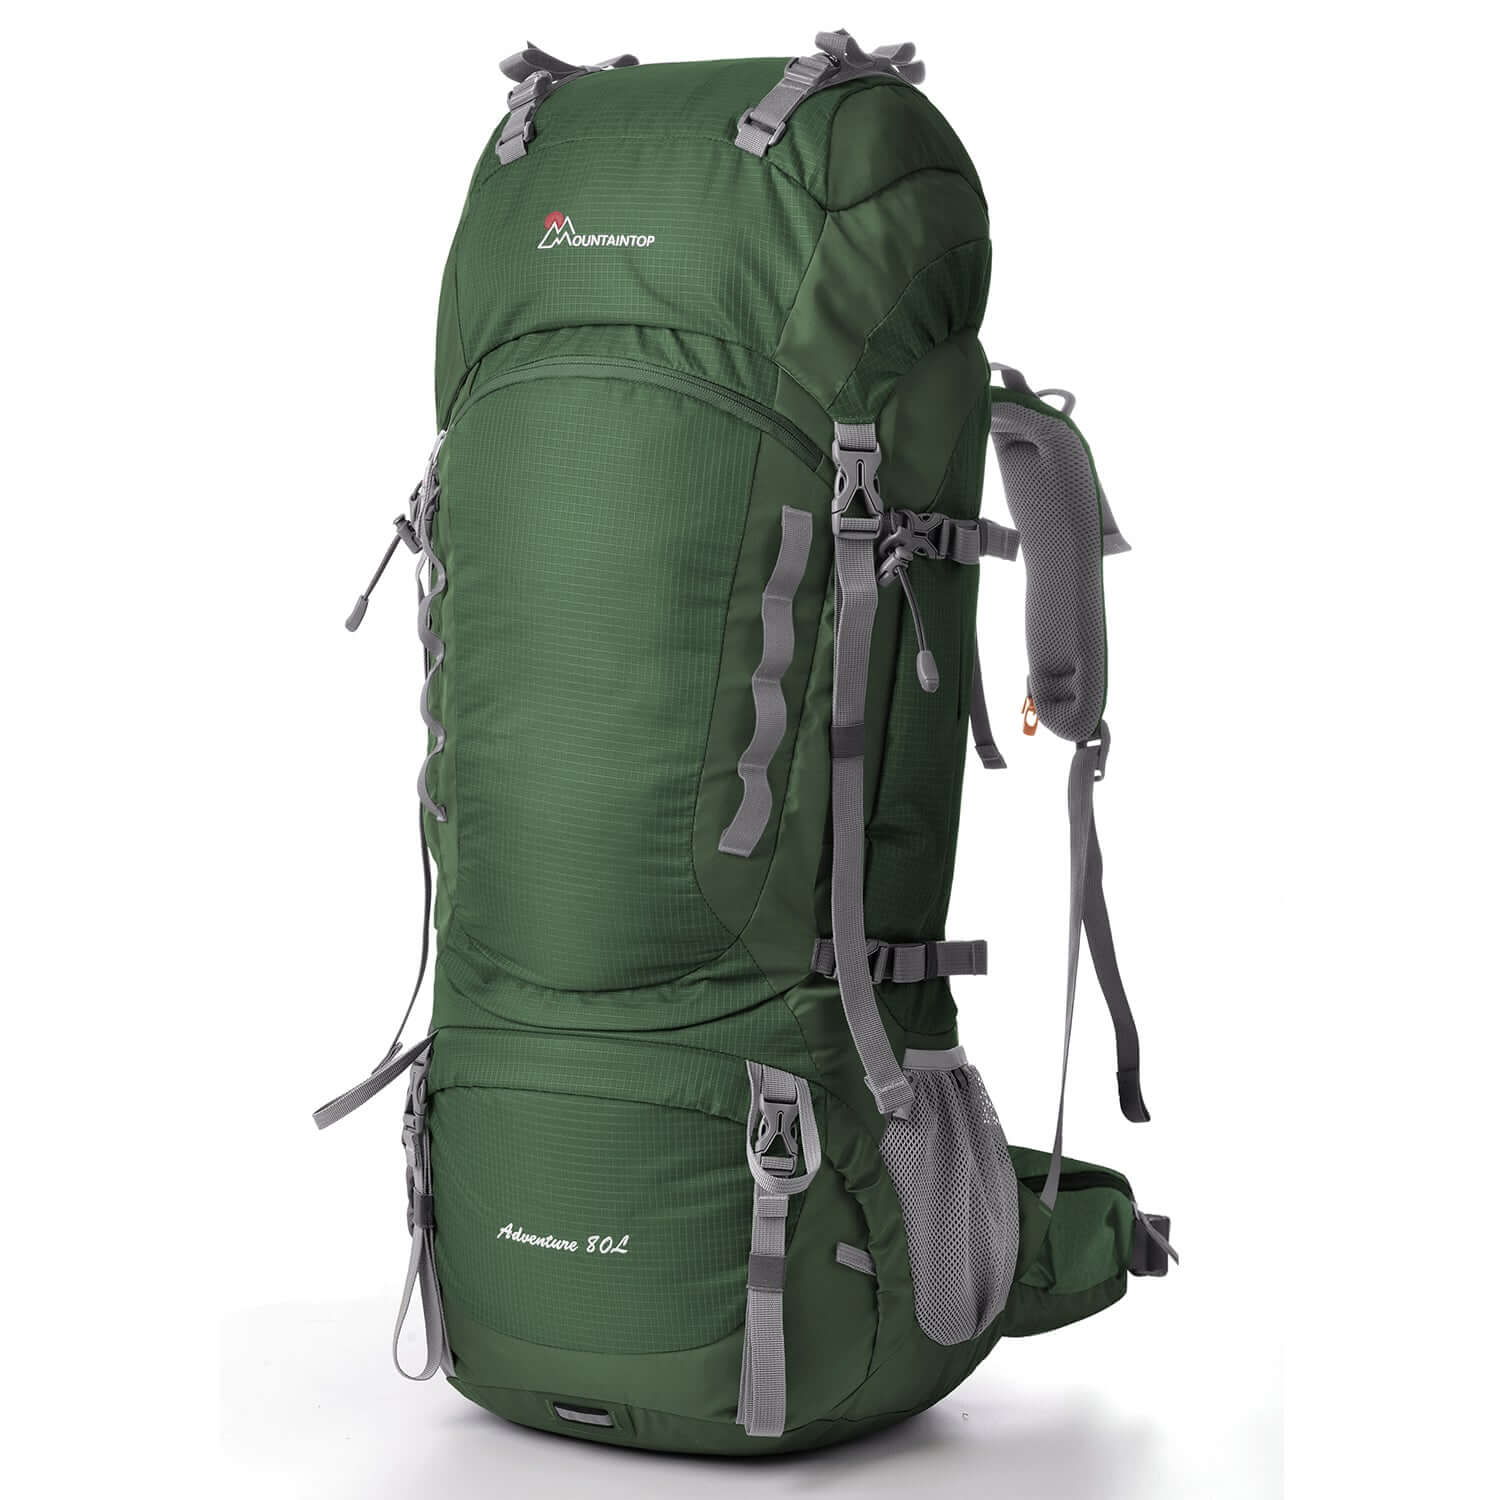 80L Hiking Backpack,Internal Frame Backpack for Men Women